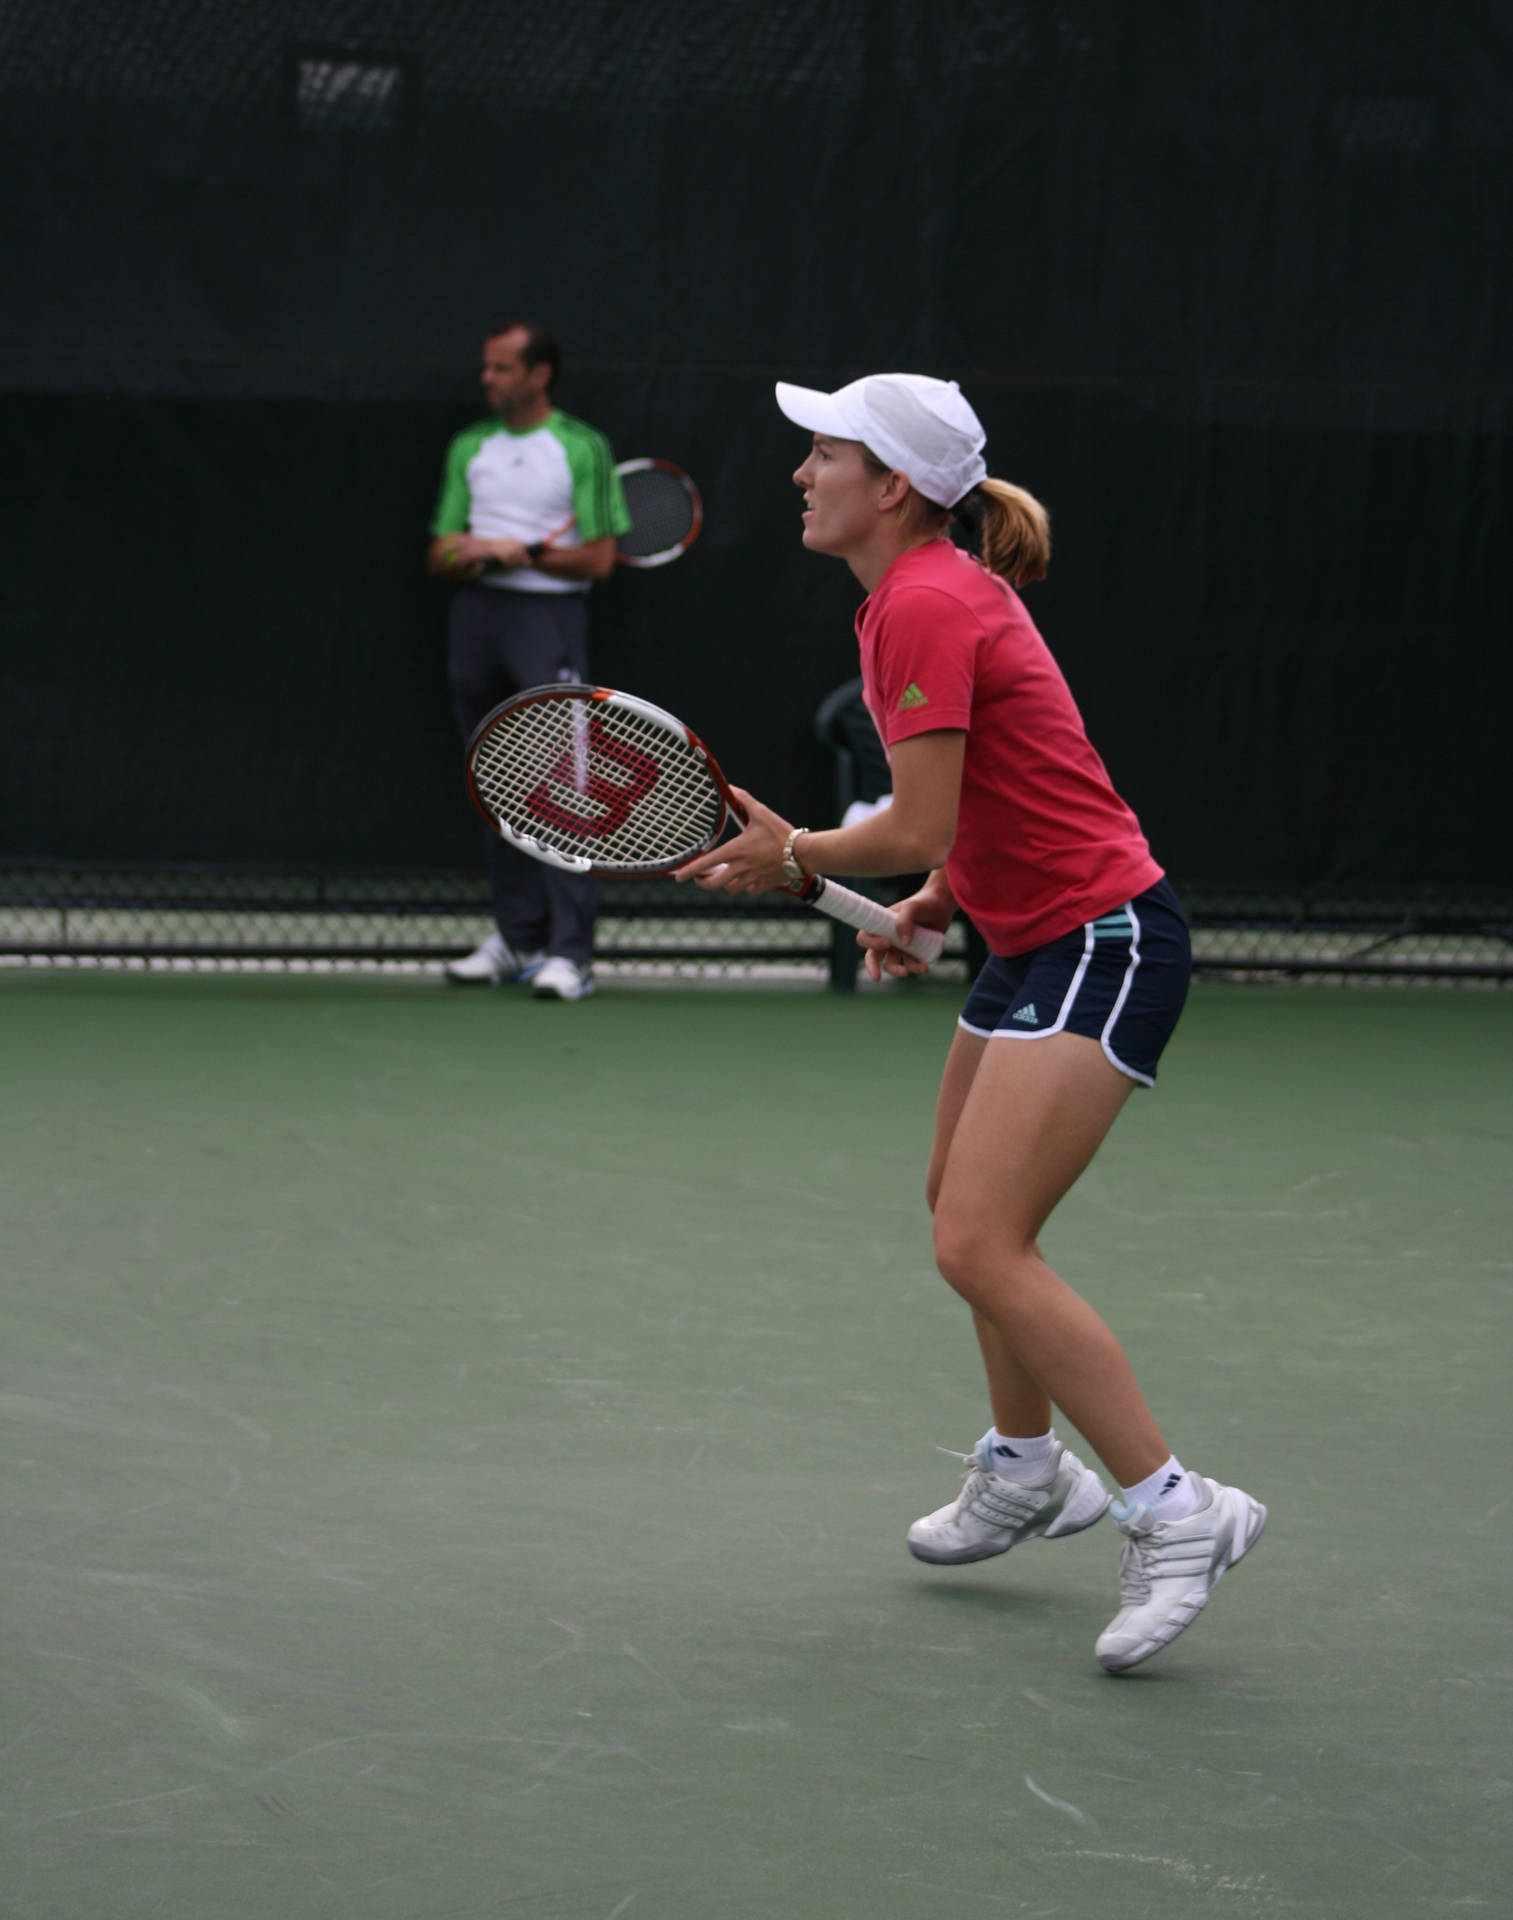 Rogerscup Justine Henin Fondo de pantalla